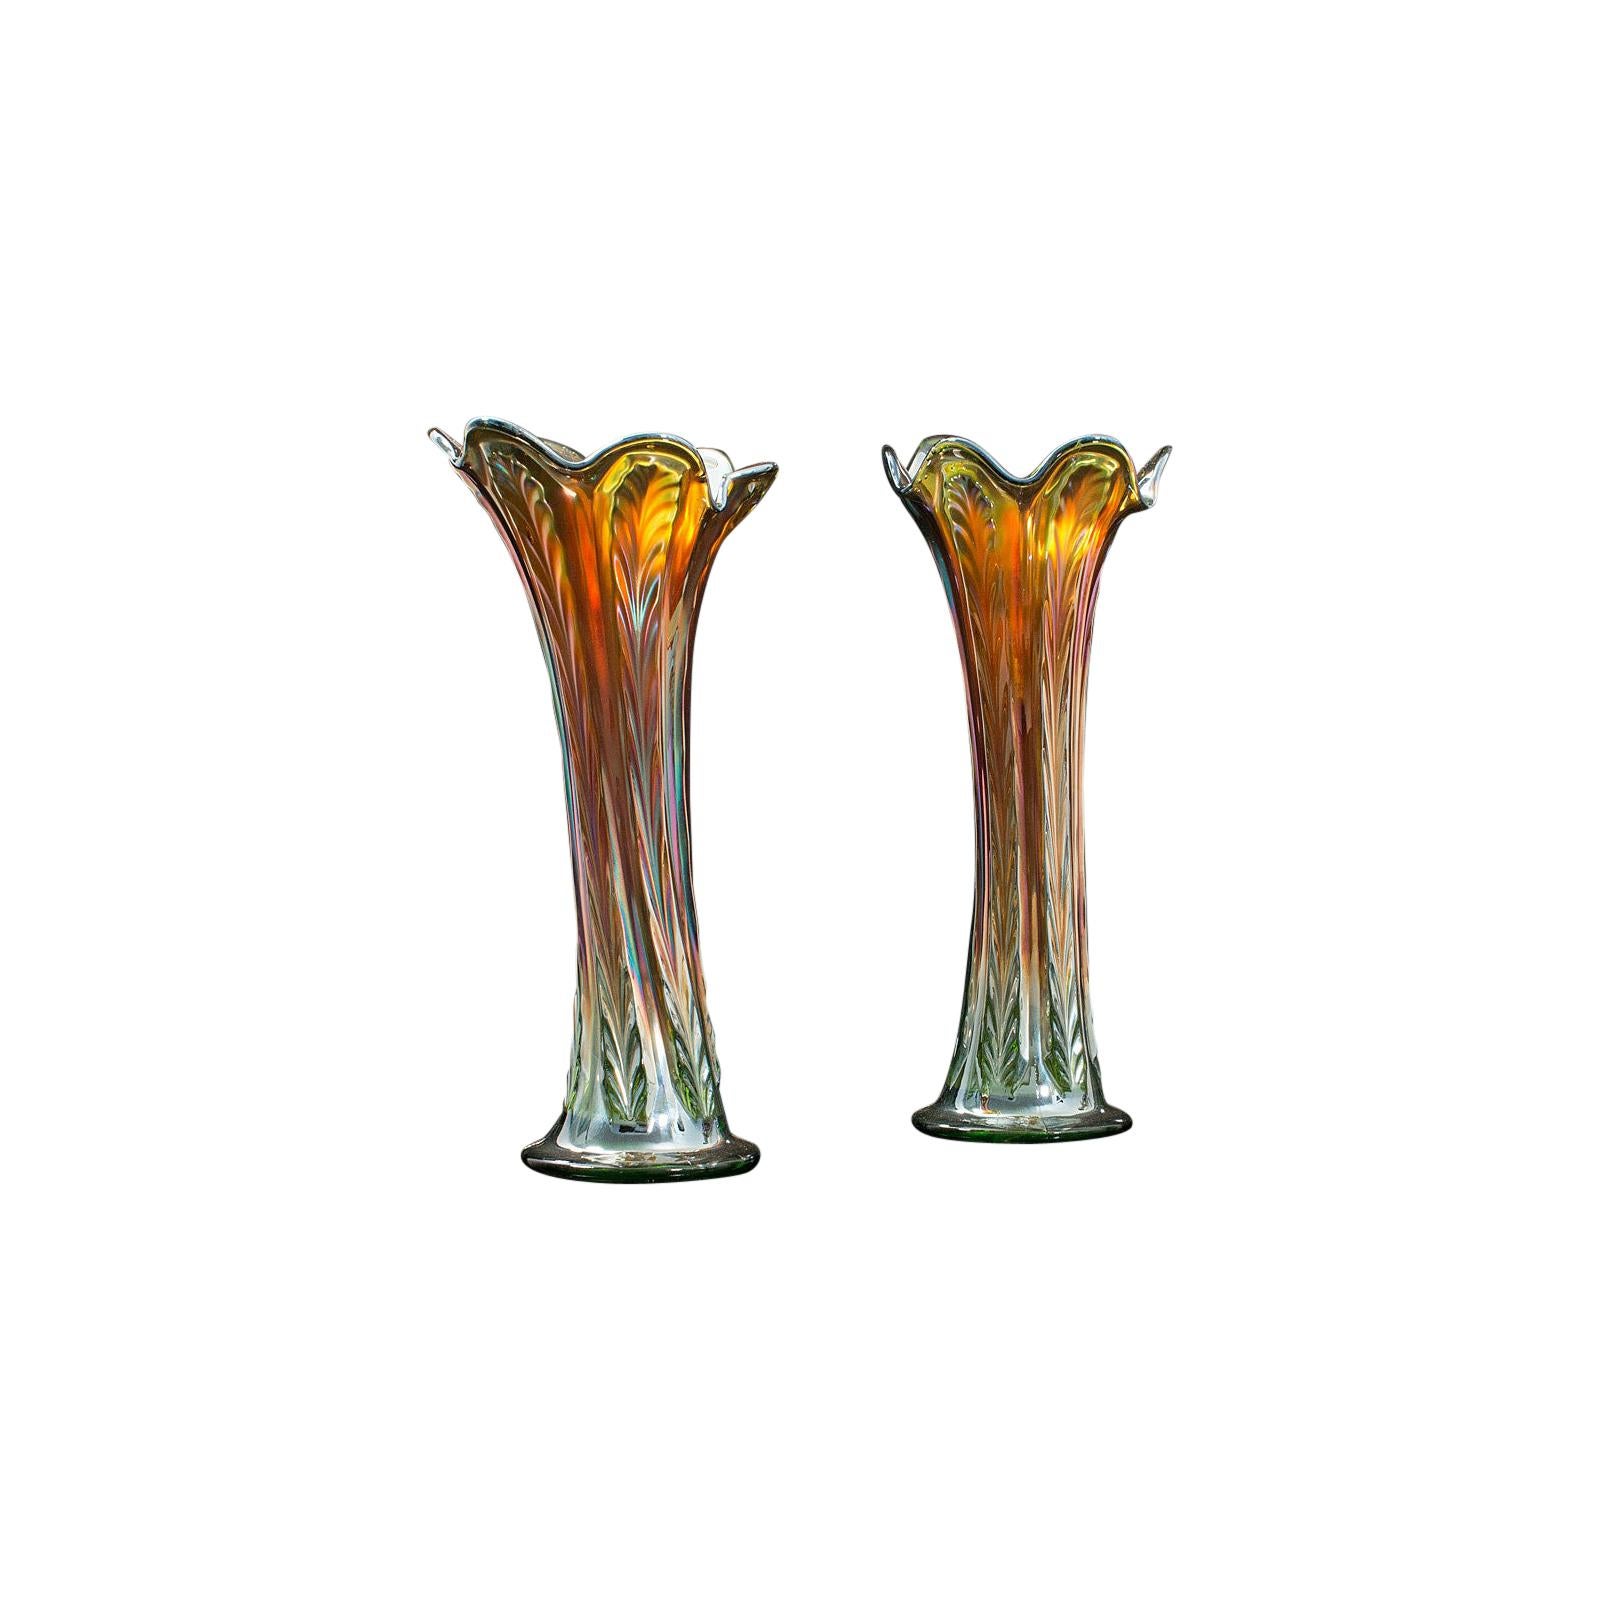 Pair of Vintage Decorative Vases, English, Carnival Glass, Lustre